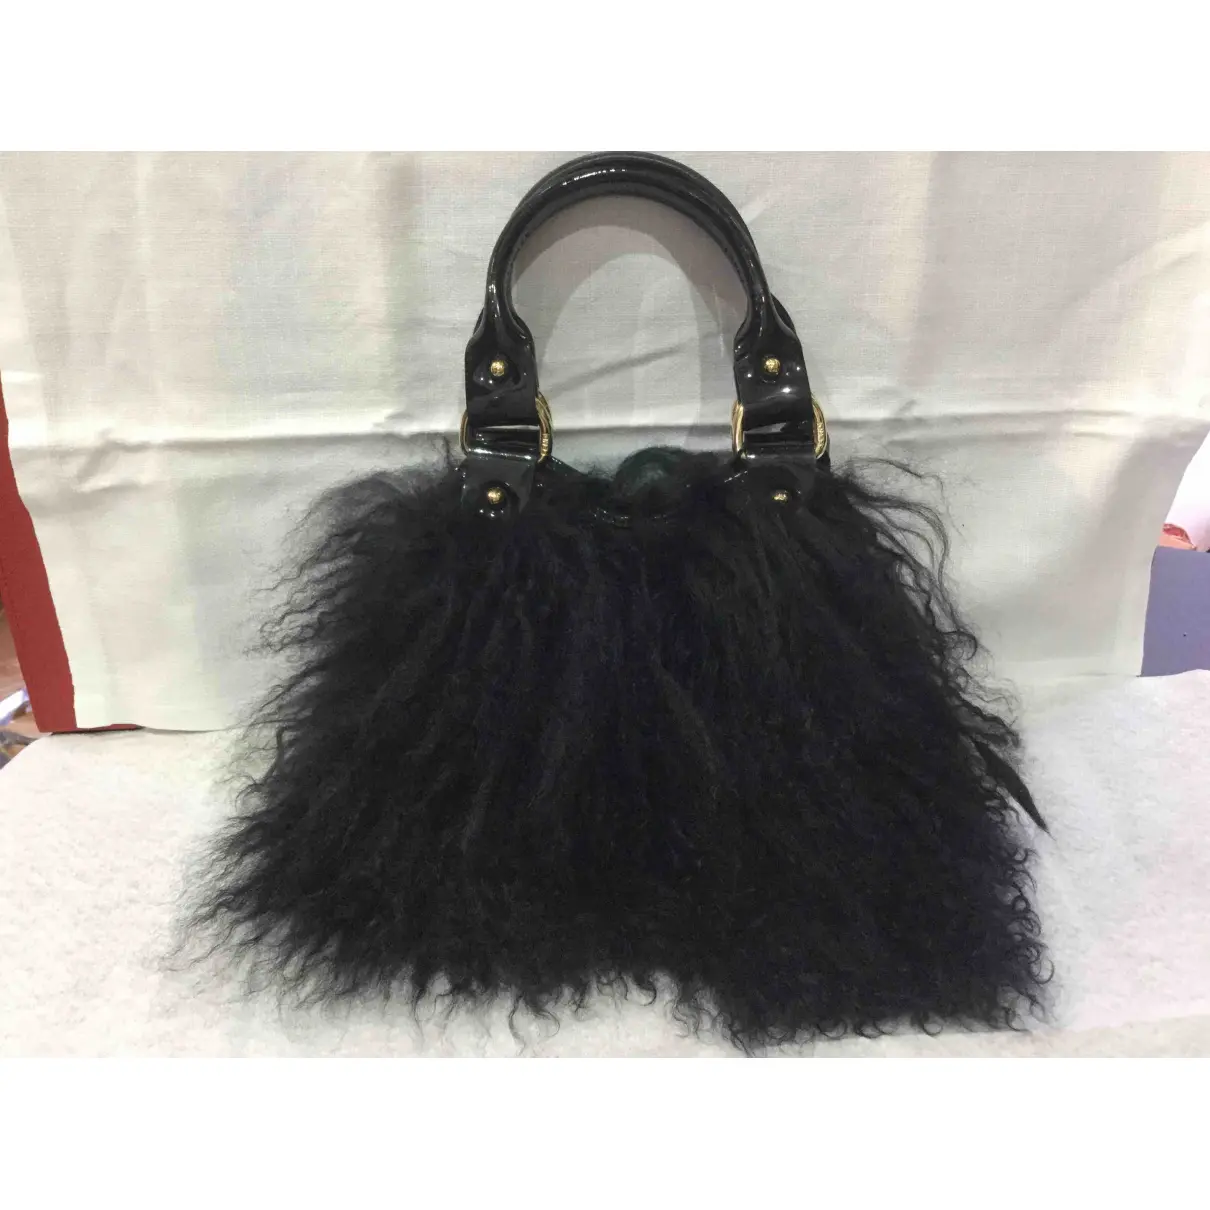 Buy Fendi Mongolian lamb handbag online